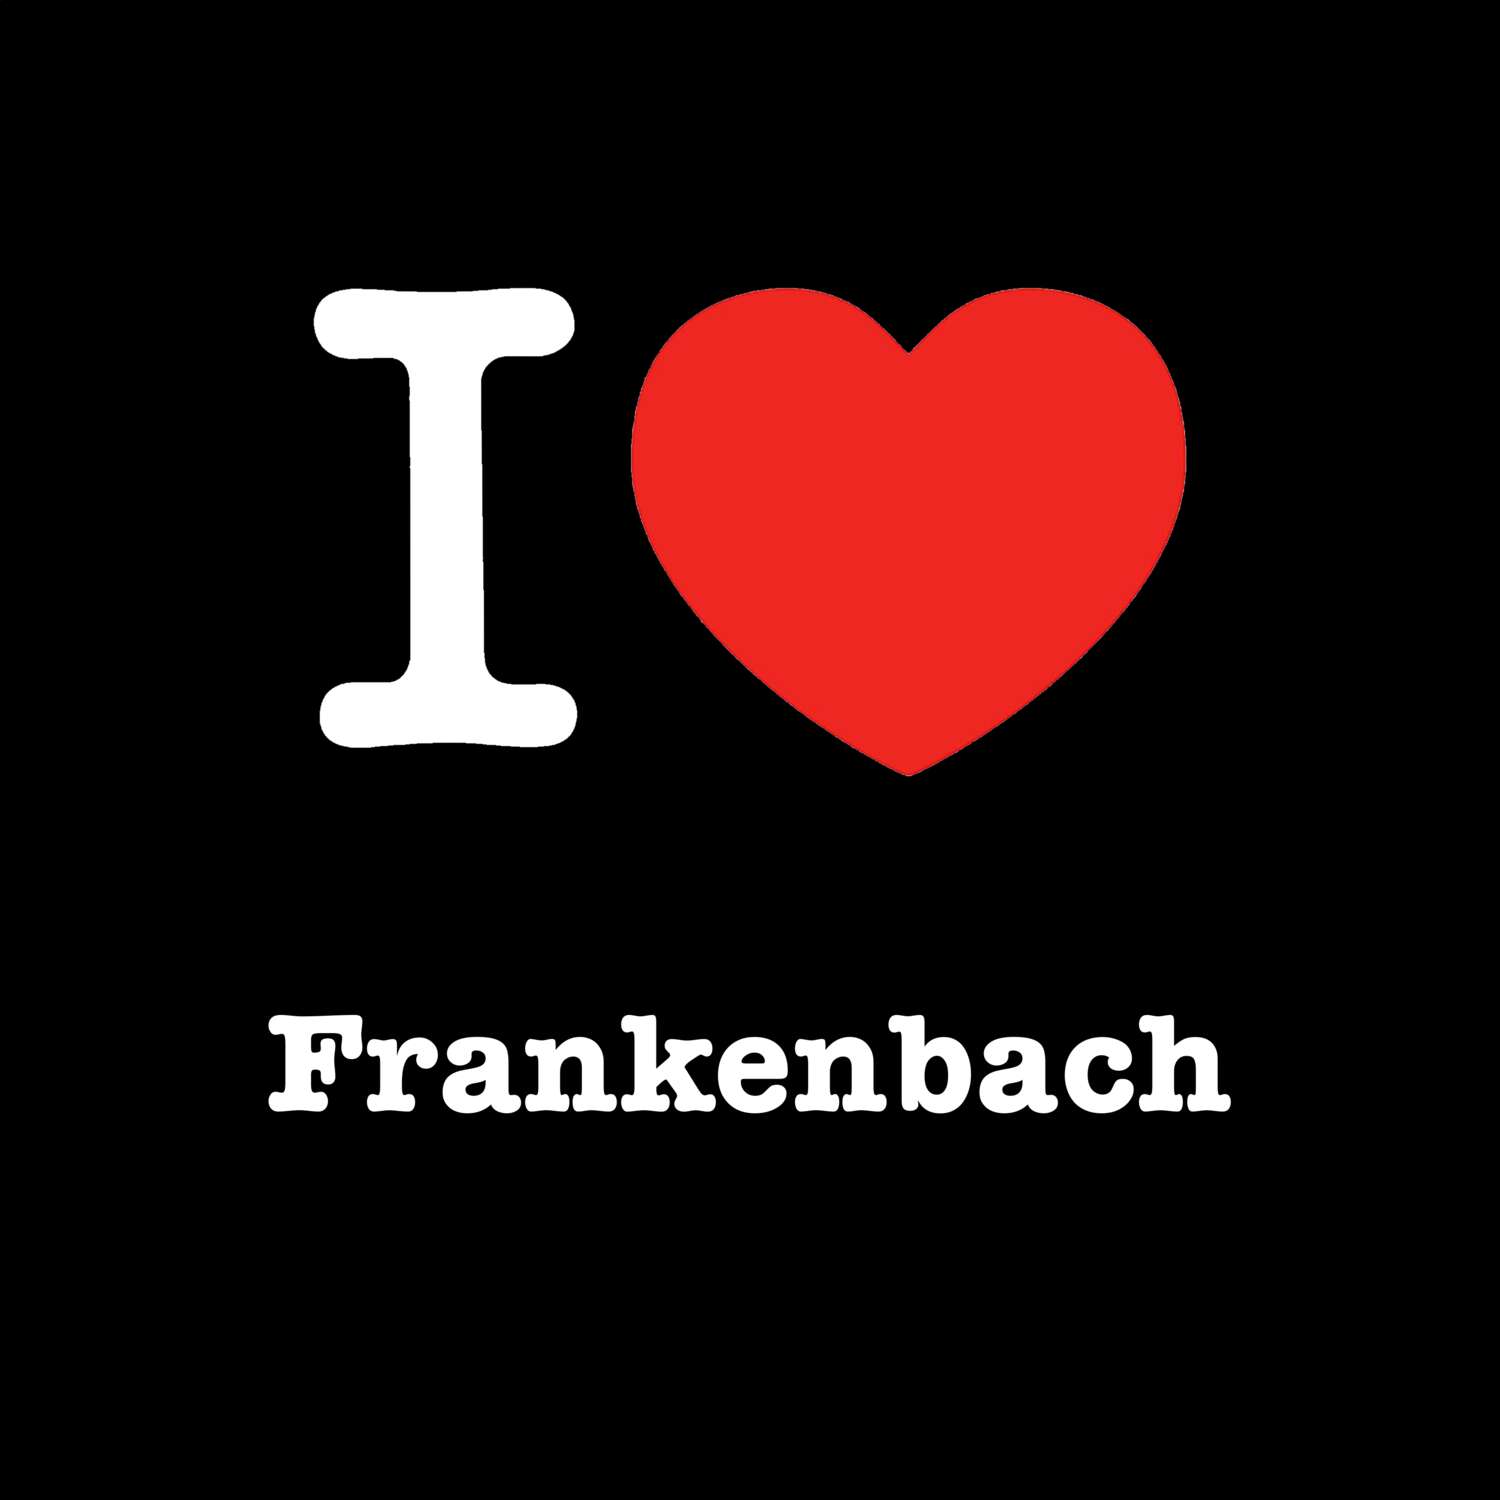 Frankenbach T-Shirt »I love«